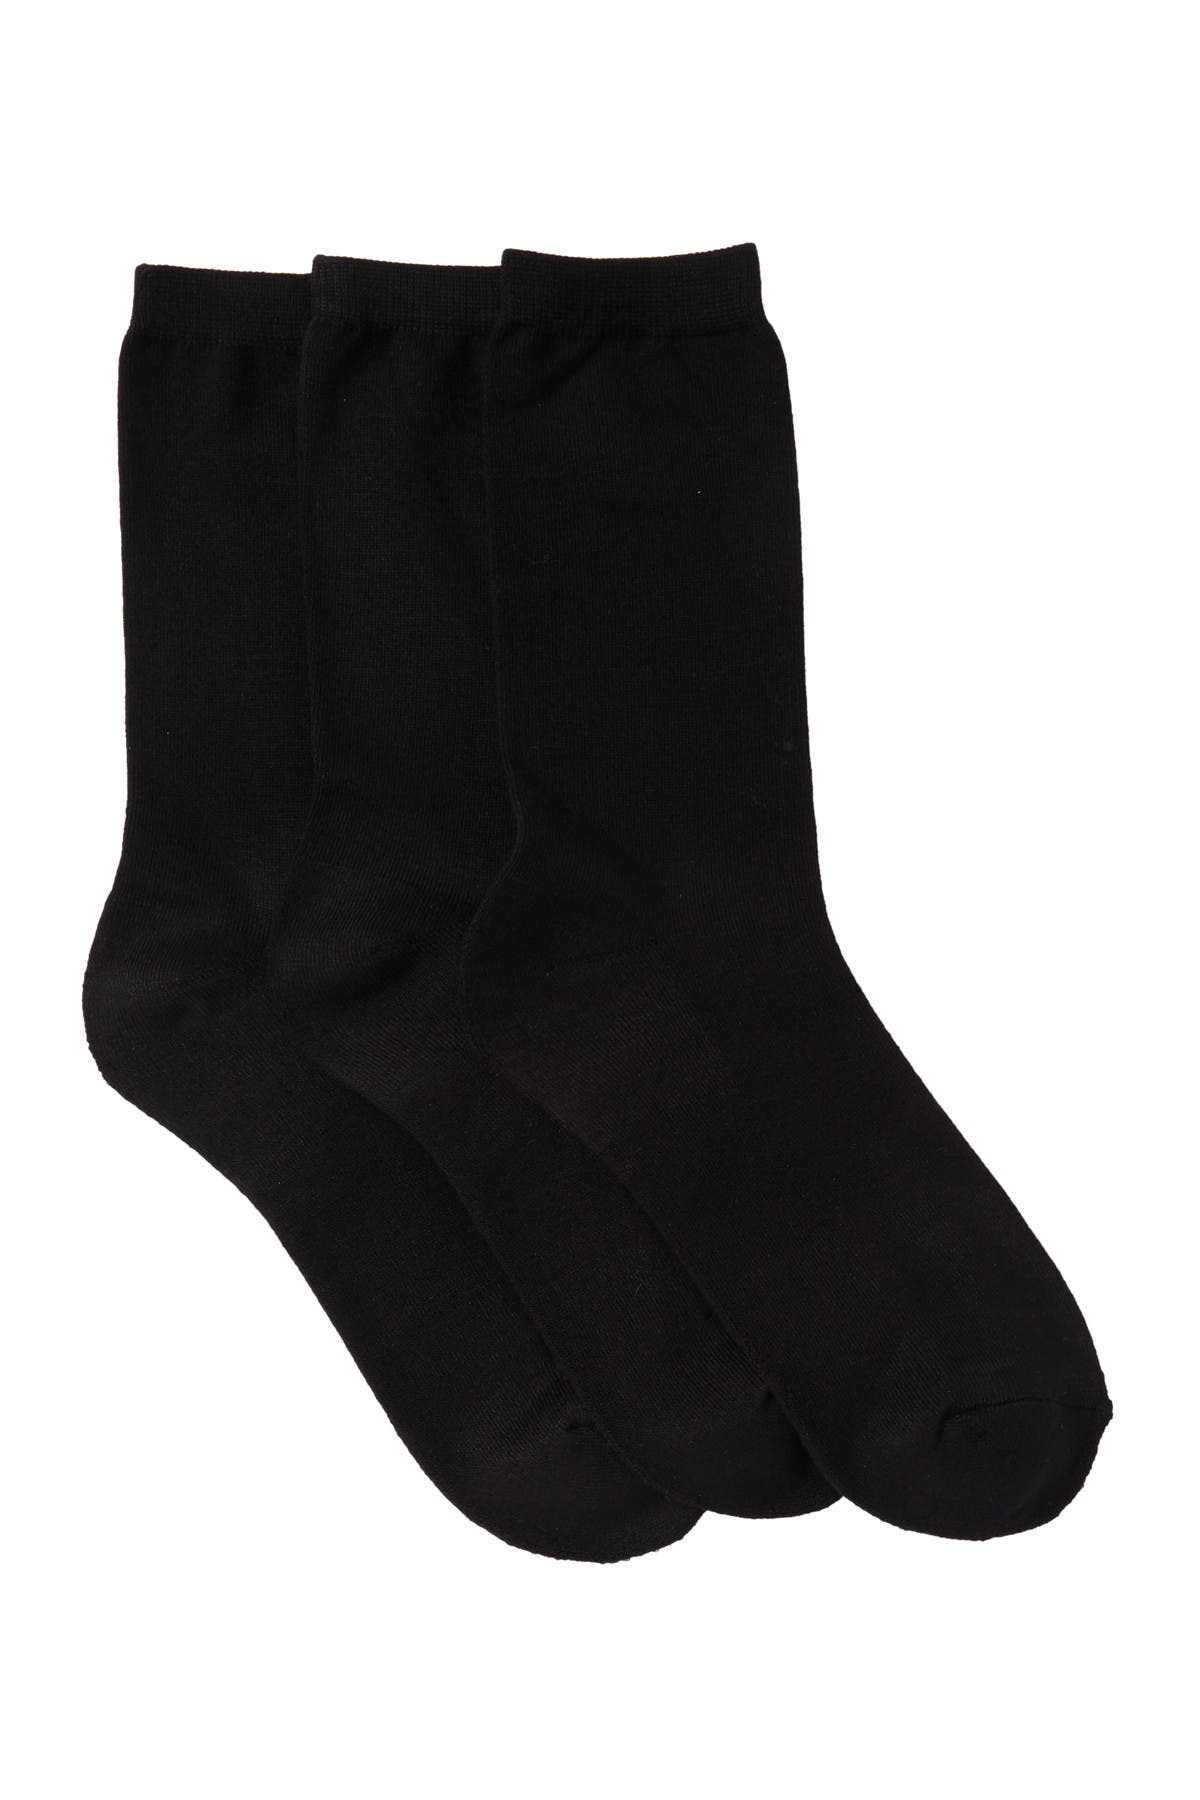 shimera | Pillow Sole Crew Socks - Pack of 3 | Nordstrom Rack